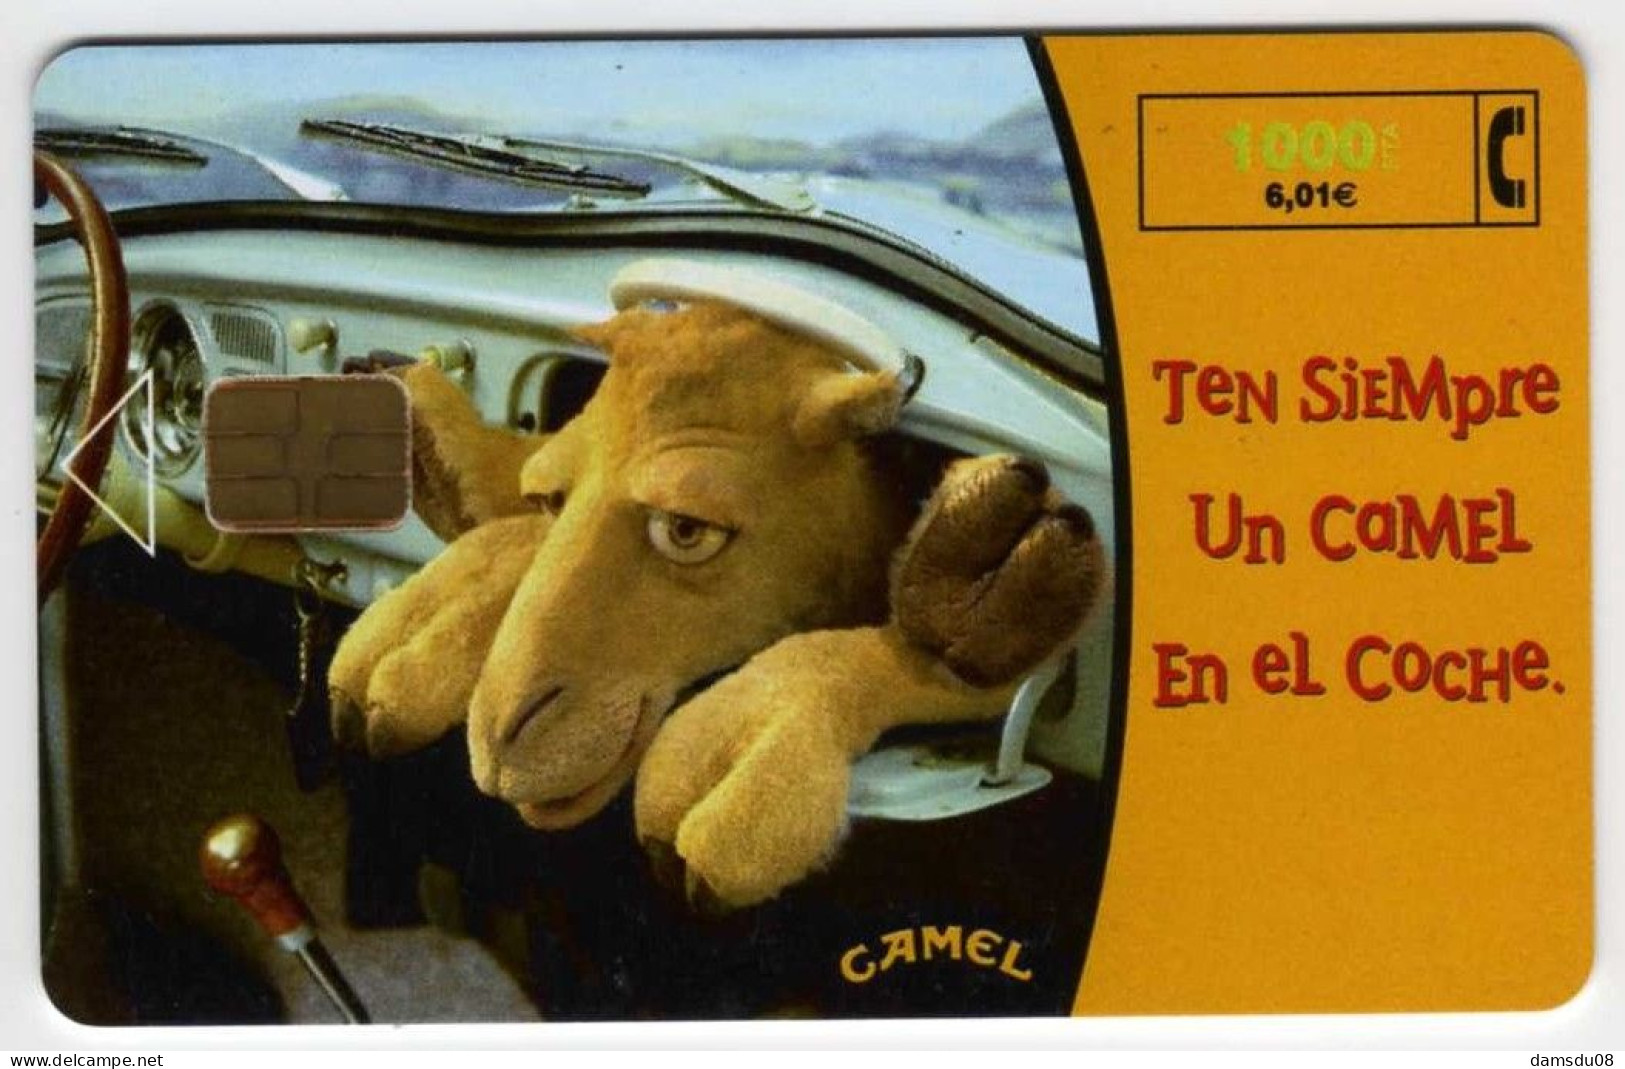 Espagne 1000 PTA Camel 01/99 1035000 Exemplaires Vide - Emisiones Básicas